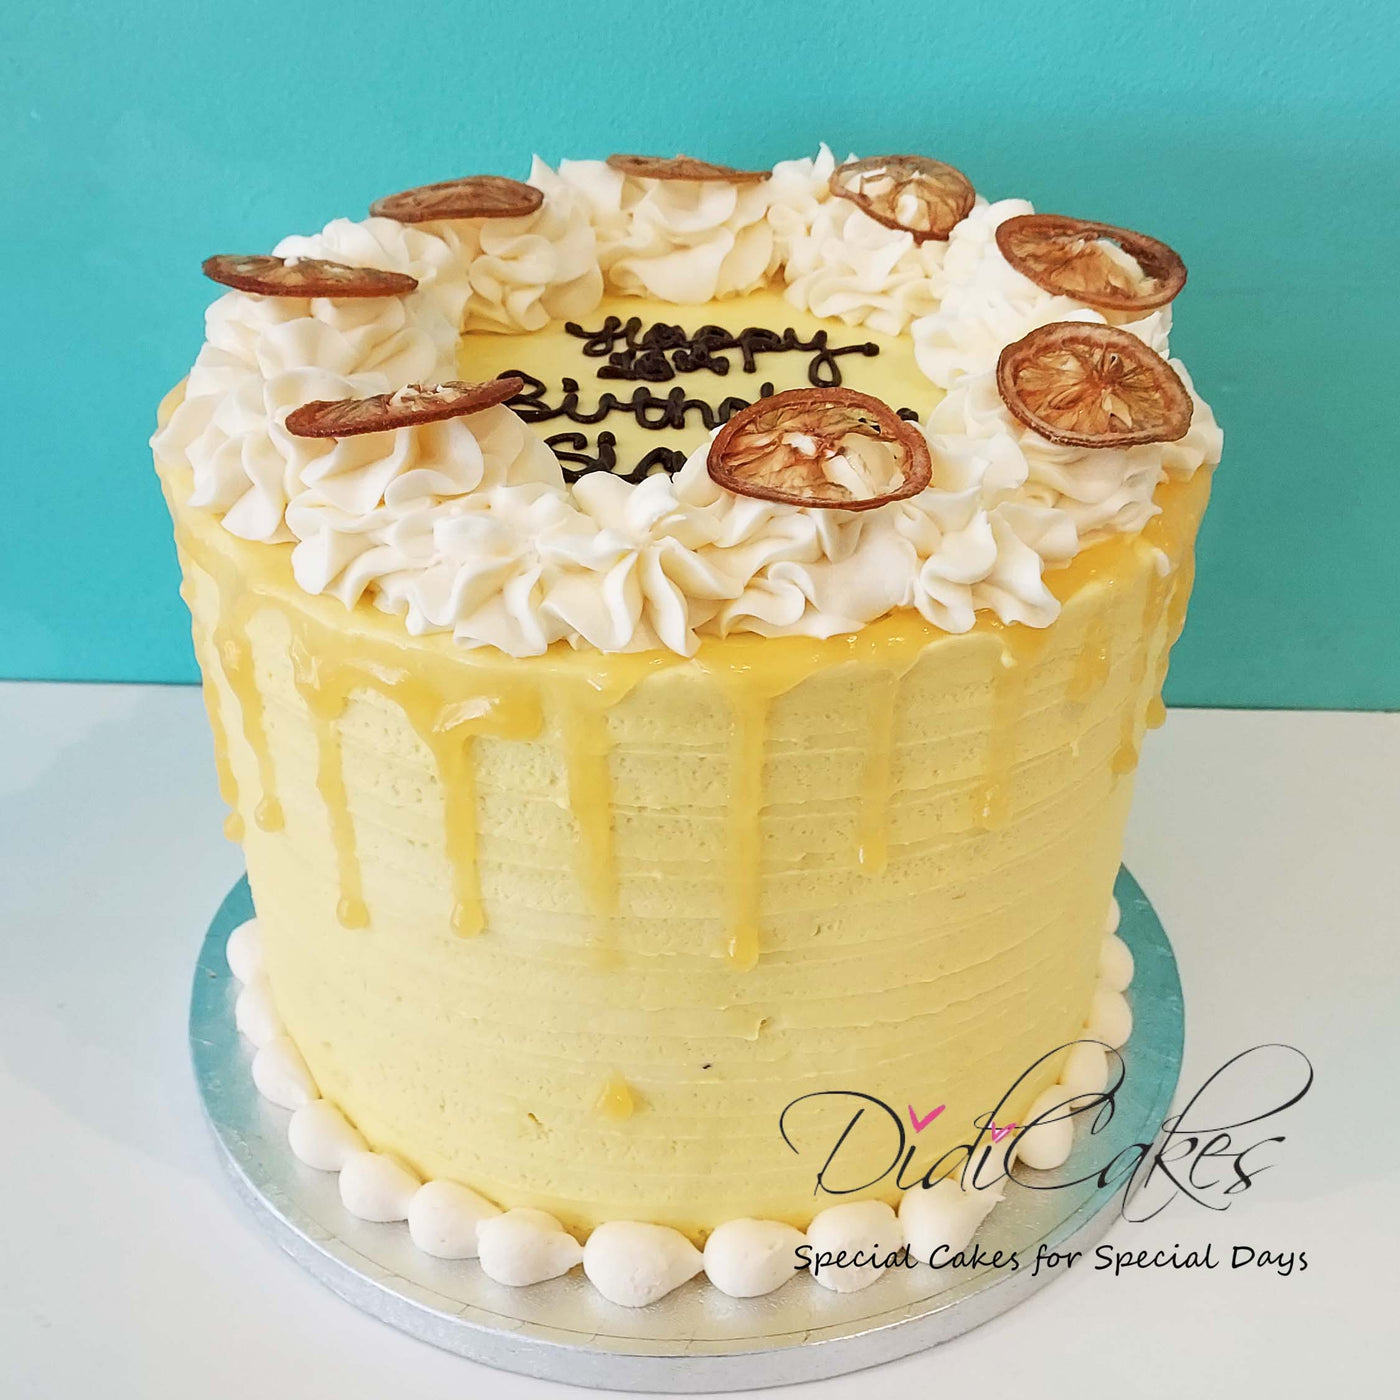 Lemon Drizzle Loaf Cake - Baker Jo's Simple, Classic Lemon Loaf Cake